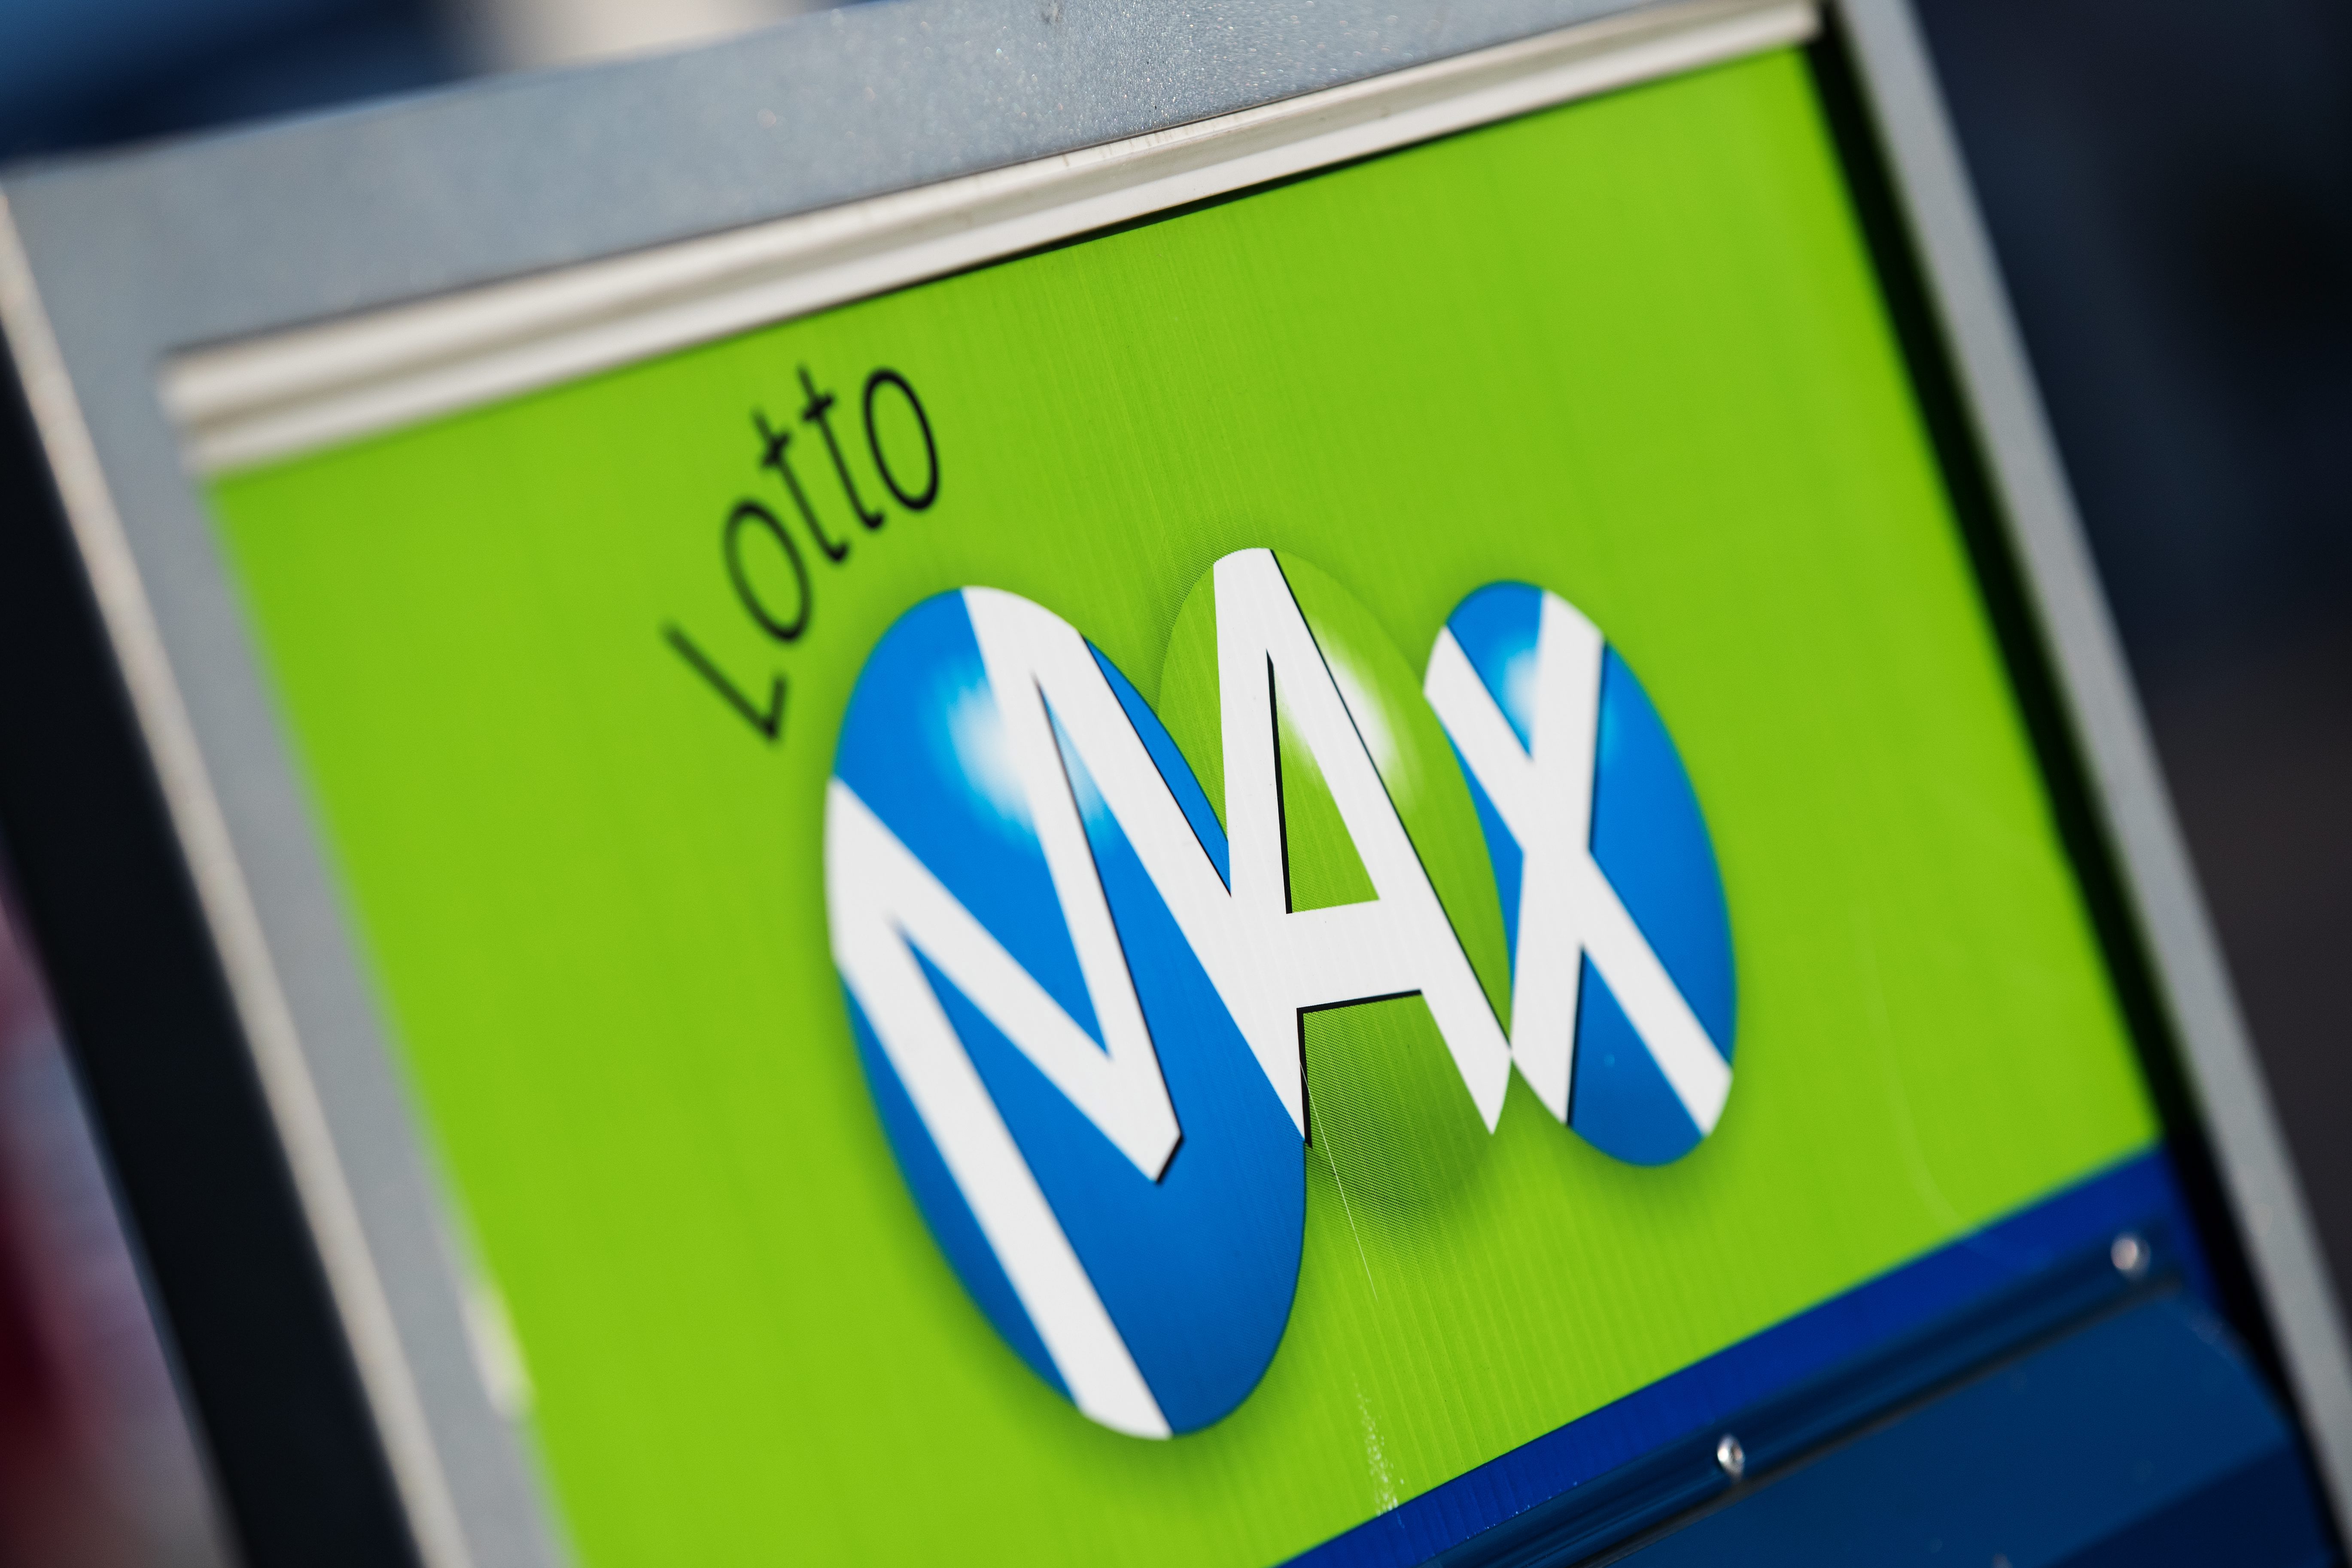 lotto max live on tv